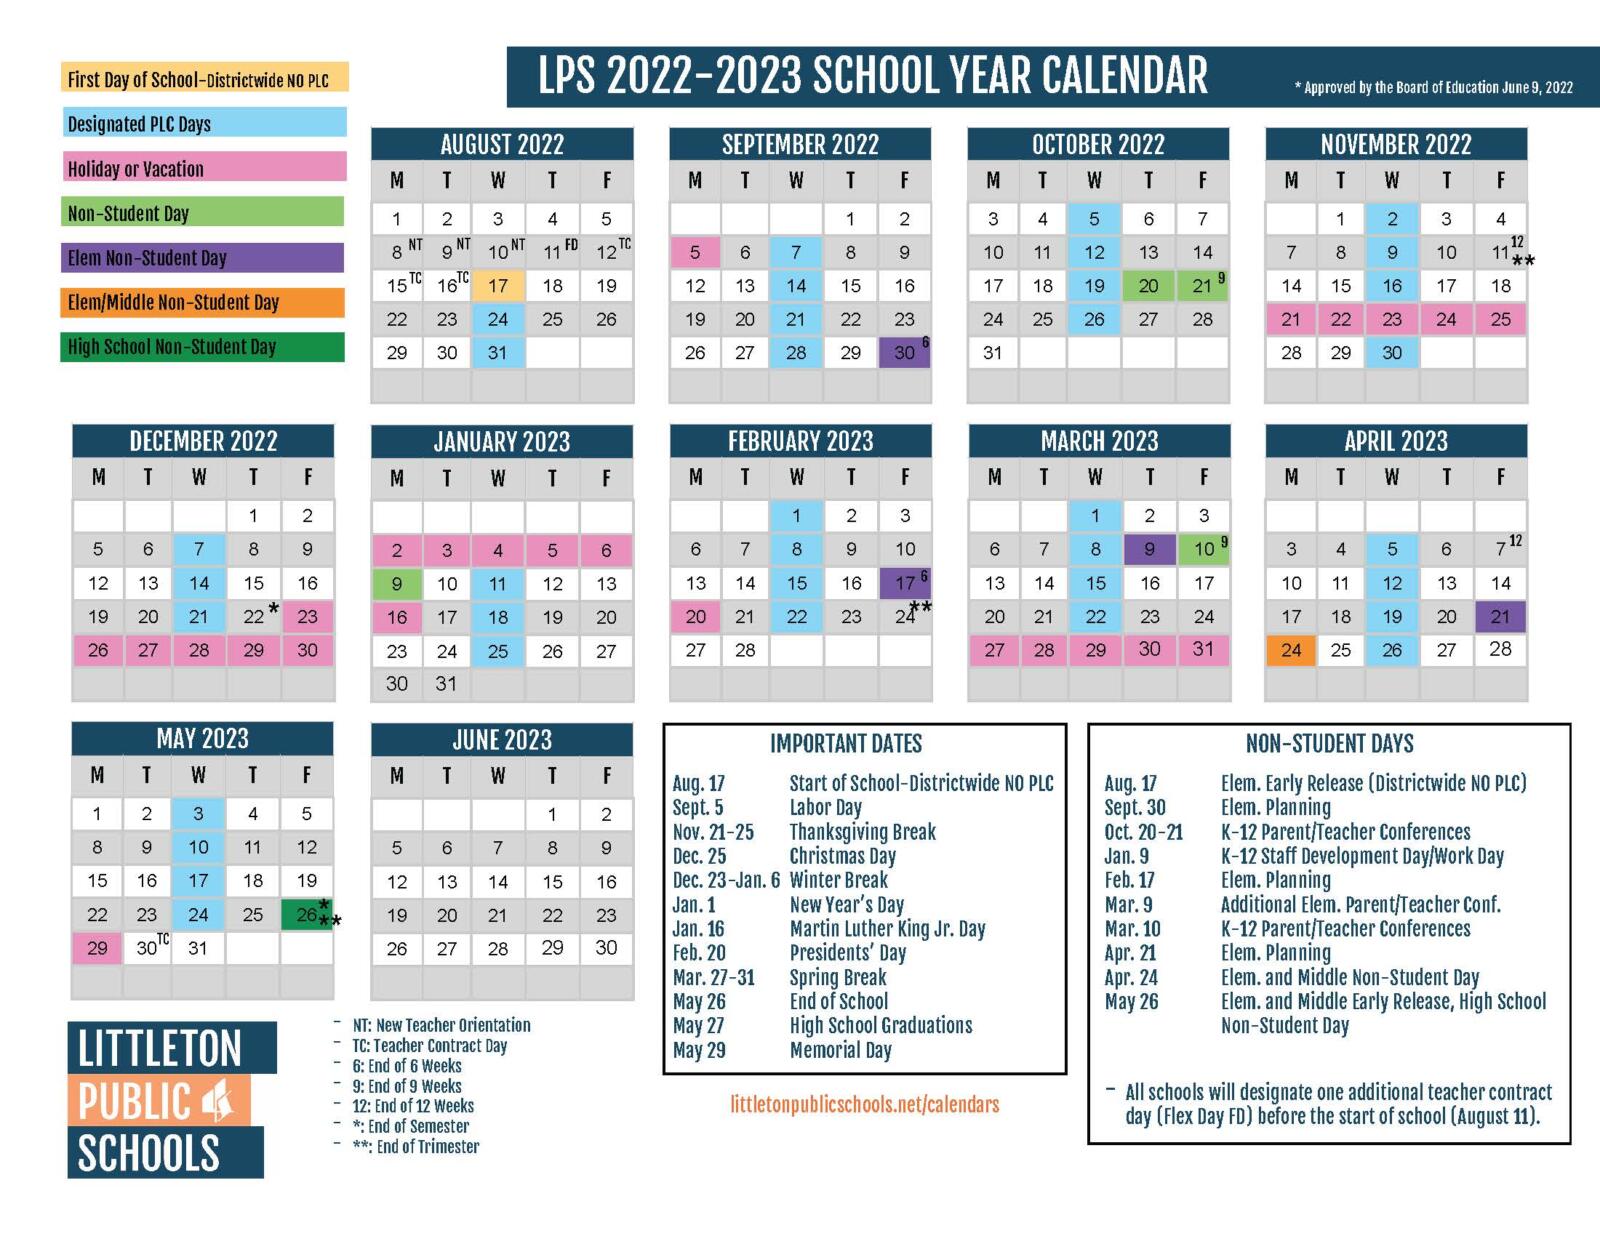 Littleton Public Schools calendar 2022-2023